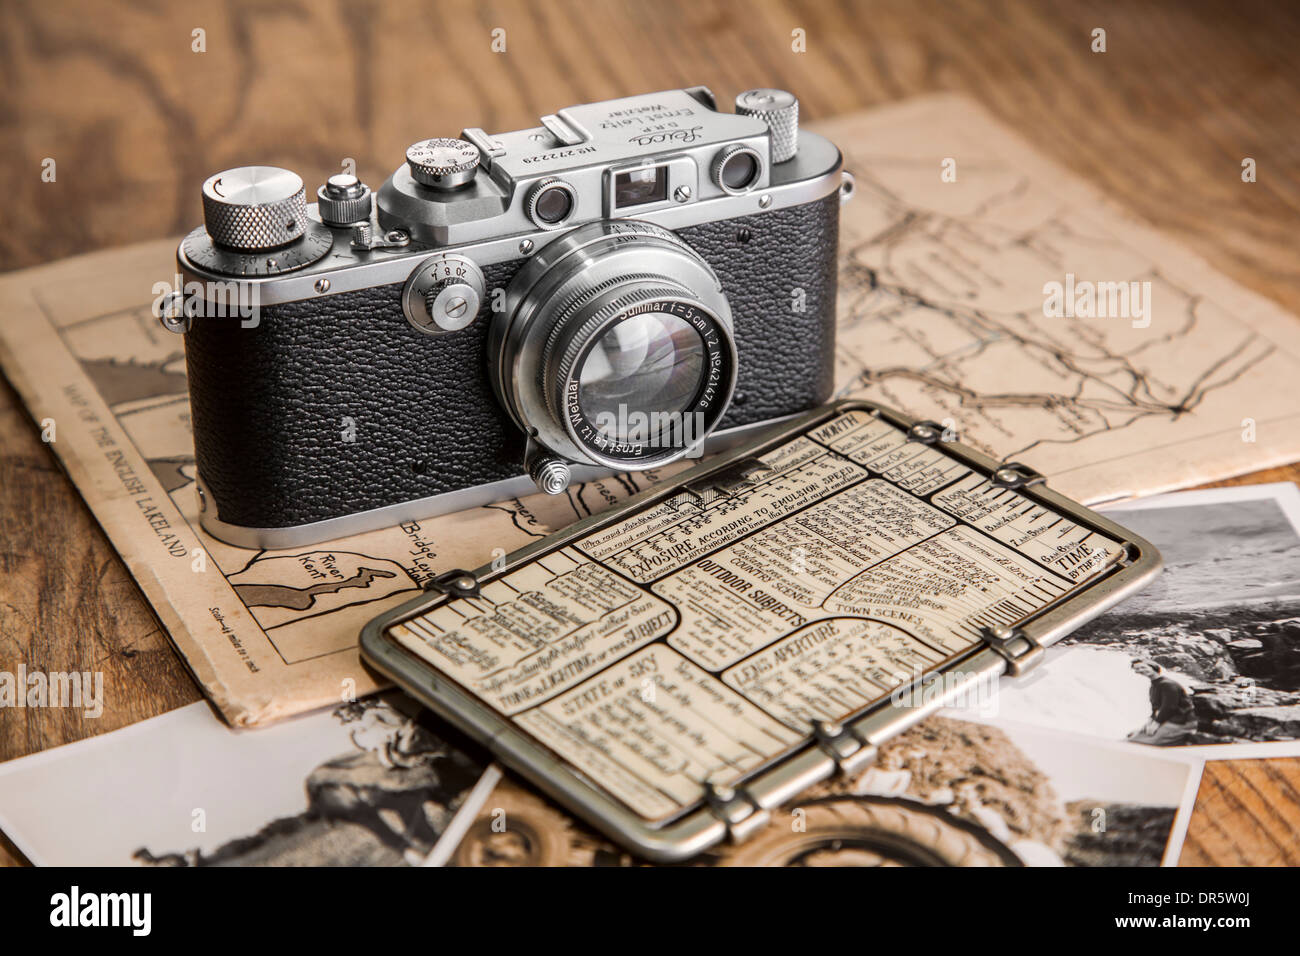 Camara leica vintage fotografías e imágenes de alta resolución - Alamy